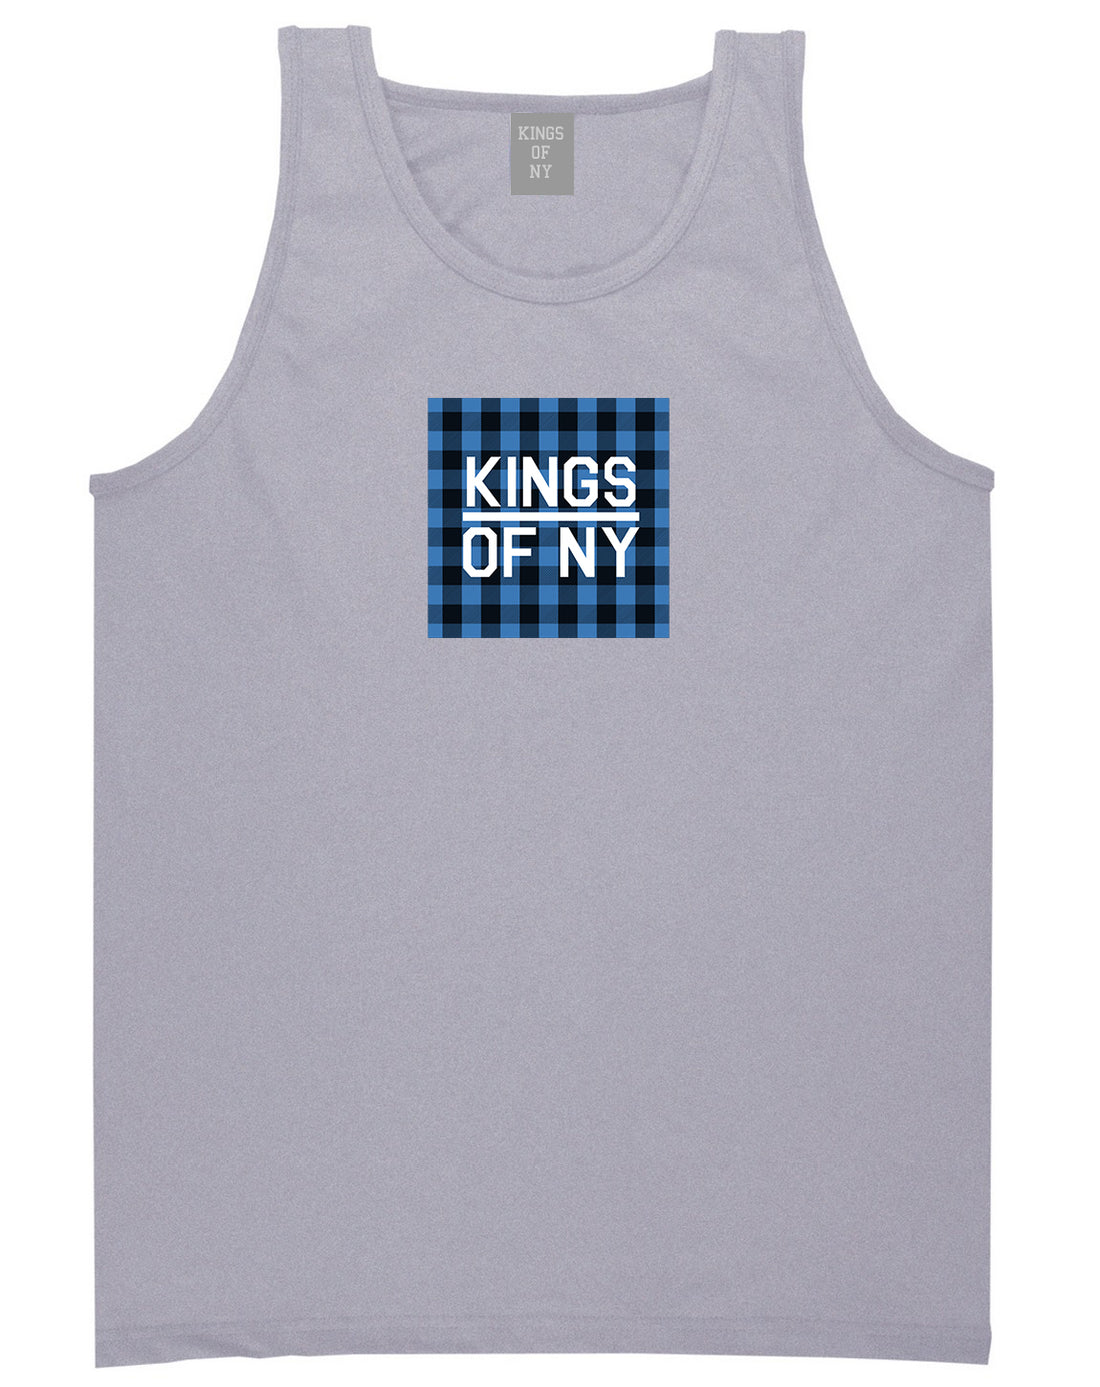 Blue Buffalo Plaid Box Logo Mens Tank Top Shirt Grey by Kings Of NY